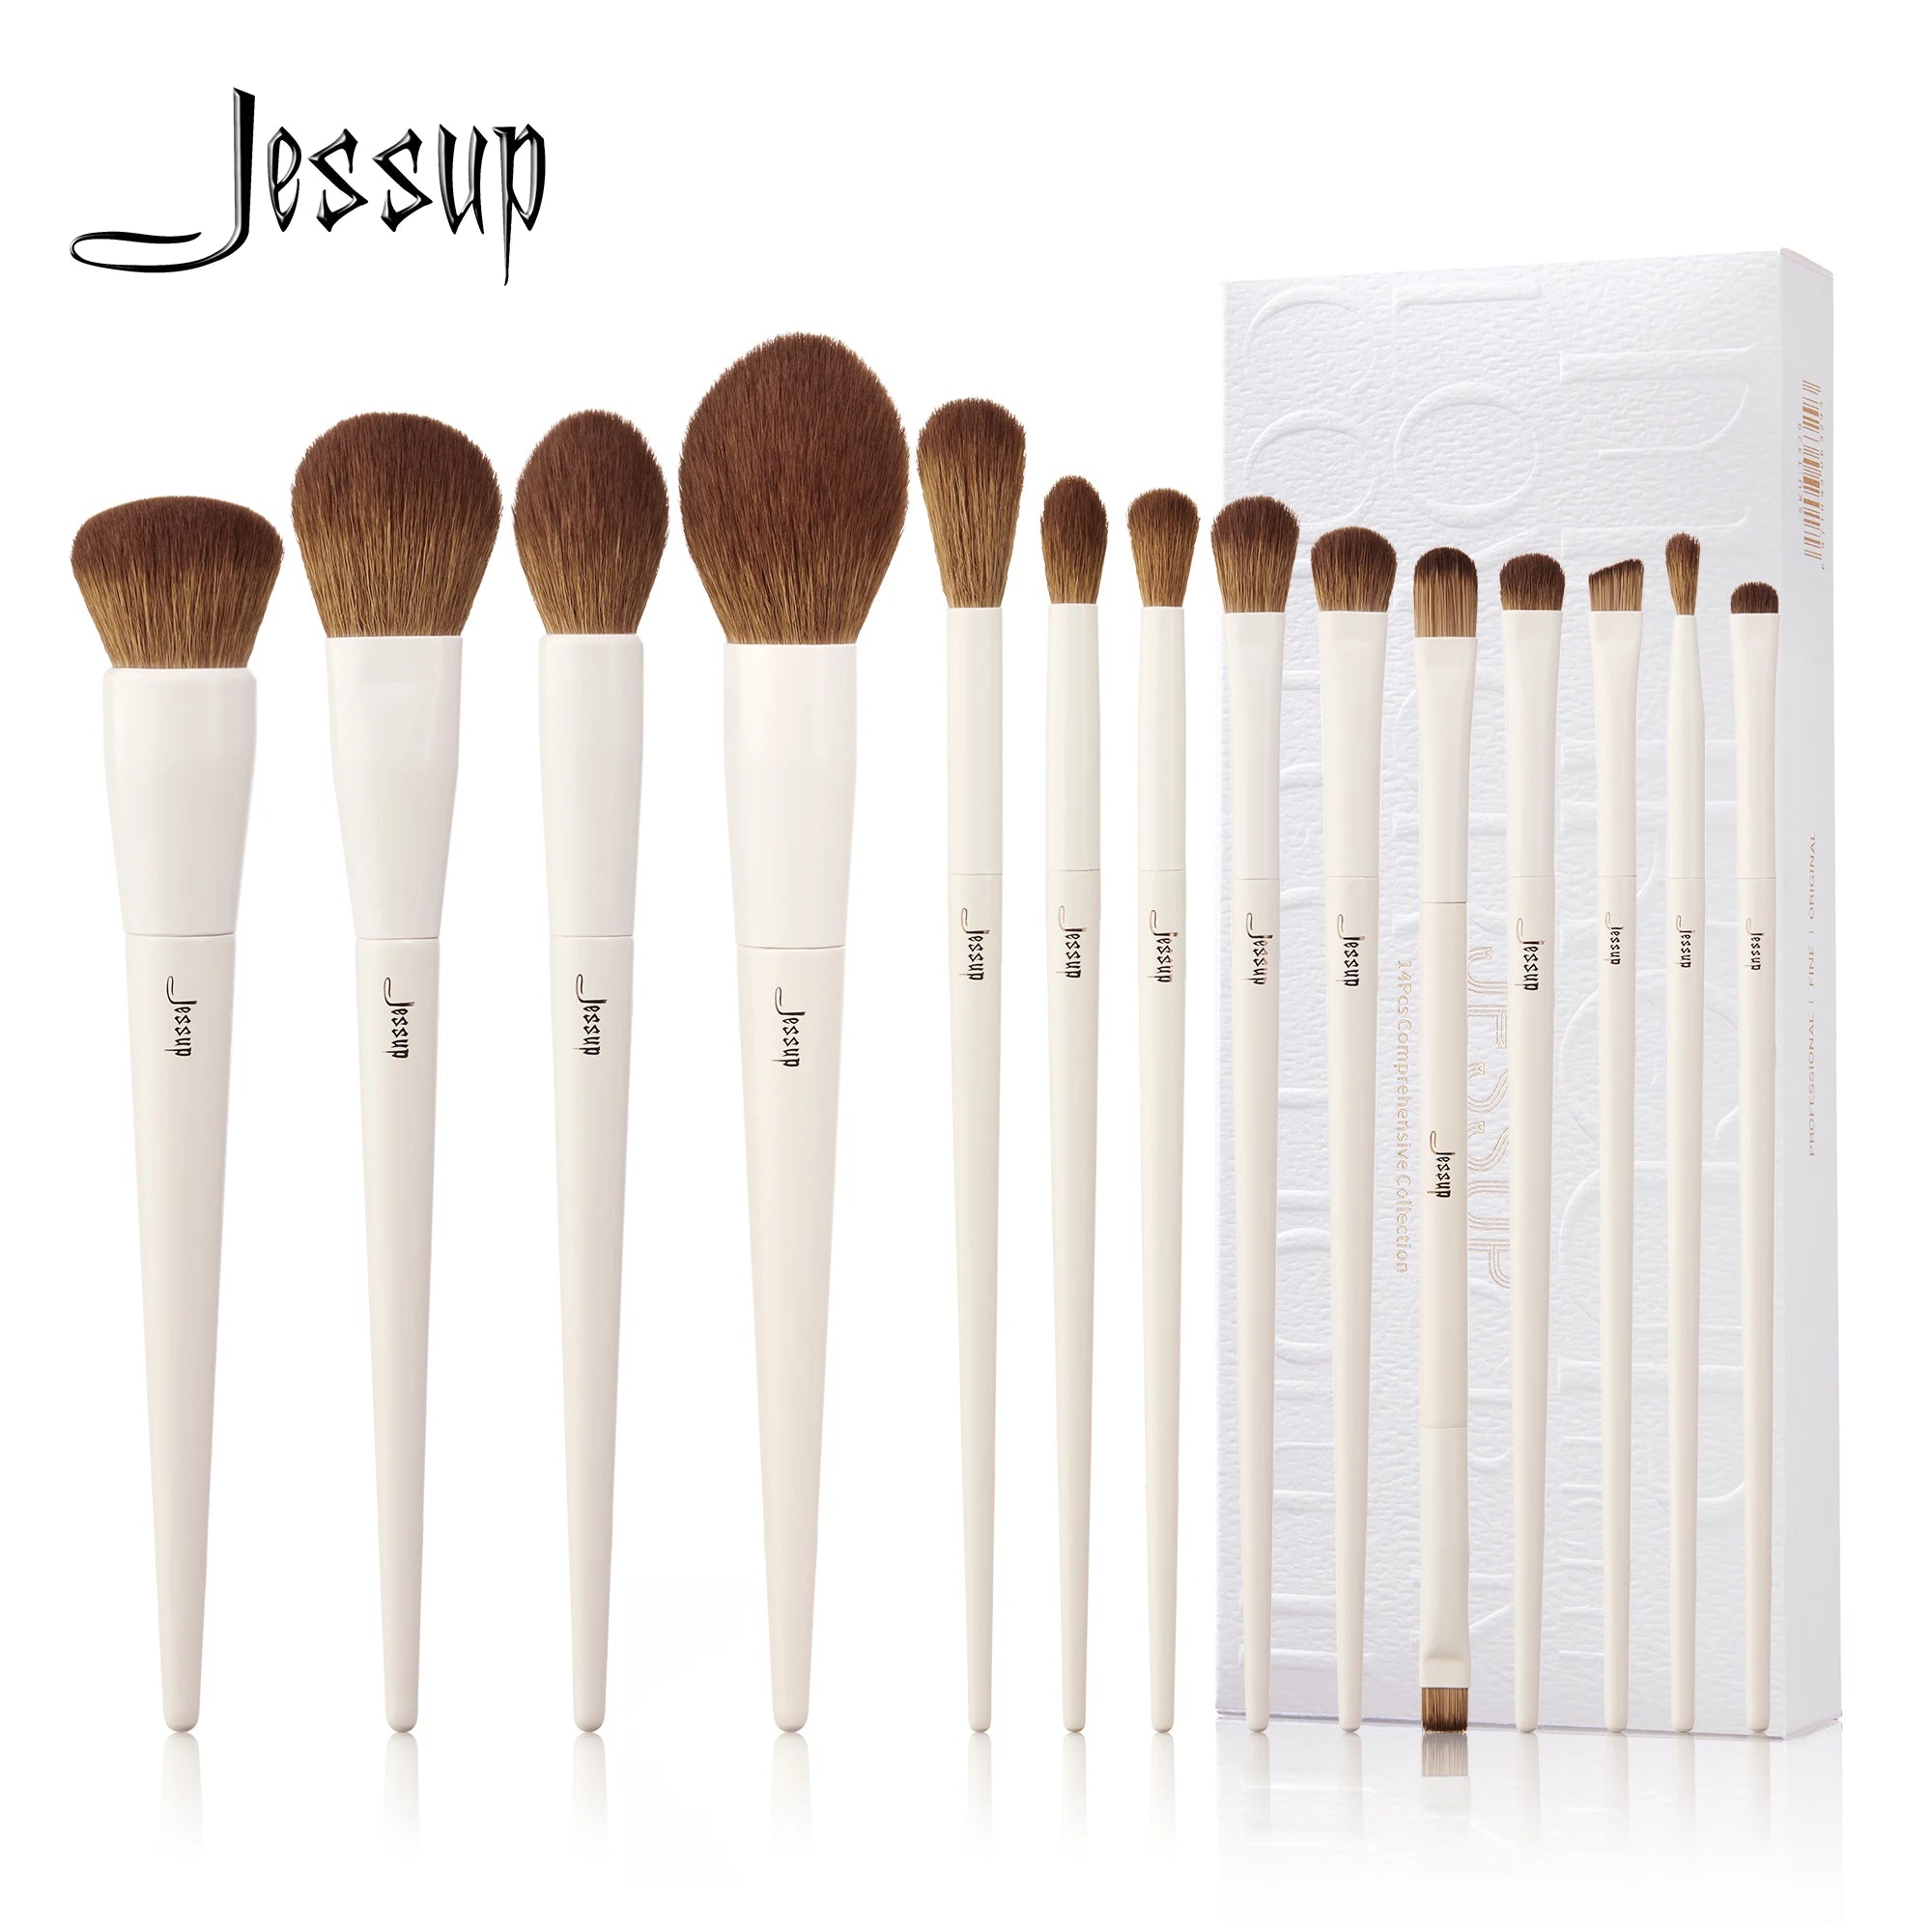 Jessup Makeup Brushes 14pc Makeup Brush set Synthetic Foundation Brush Powder Contour Eyeshadow Liner Blending Highlight T329